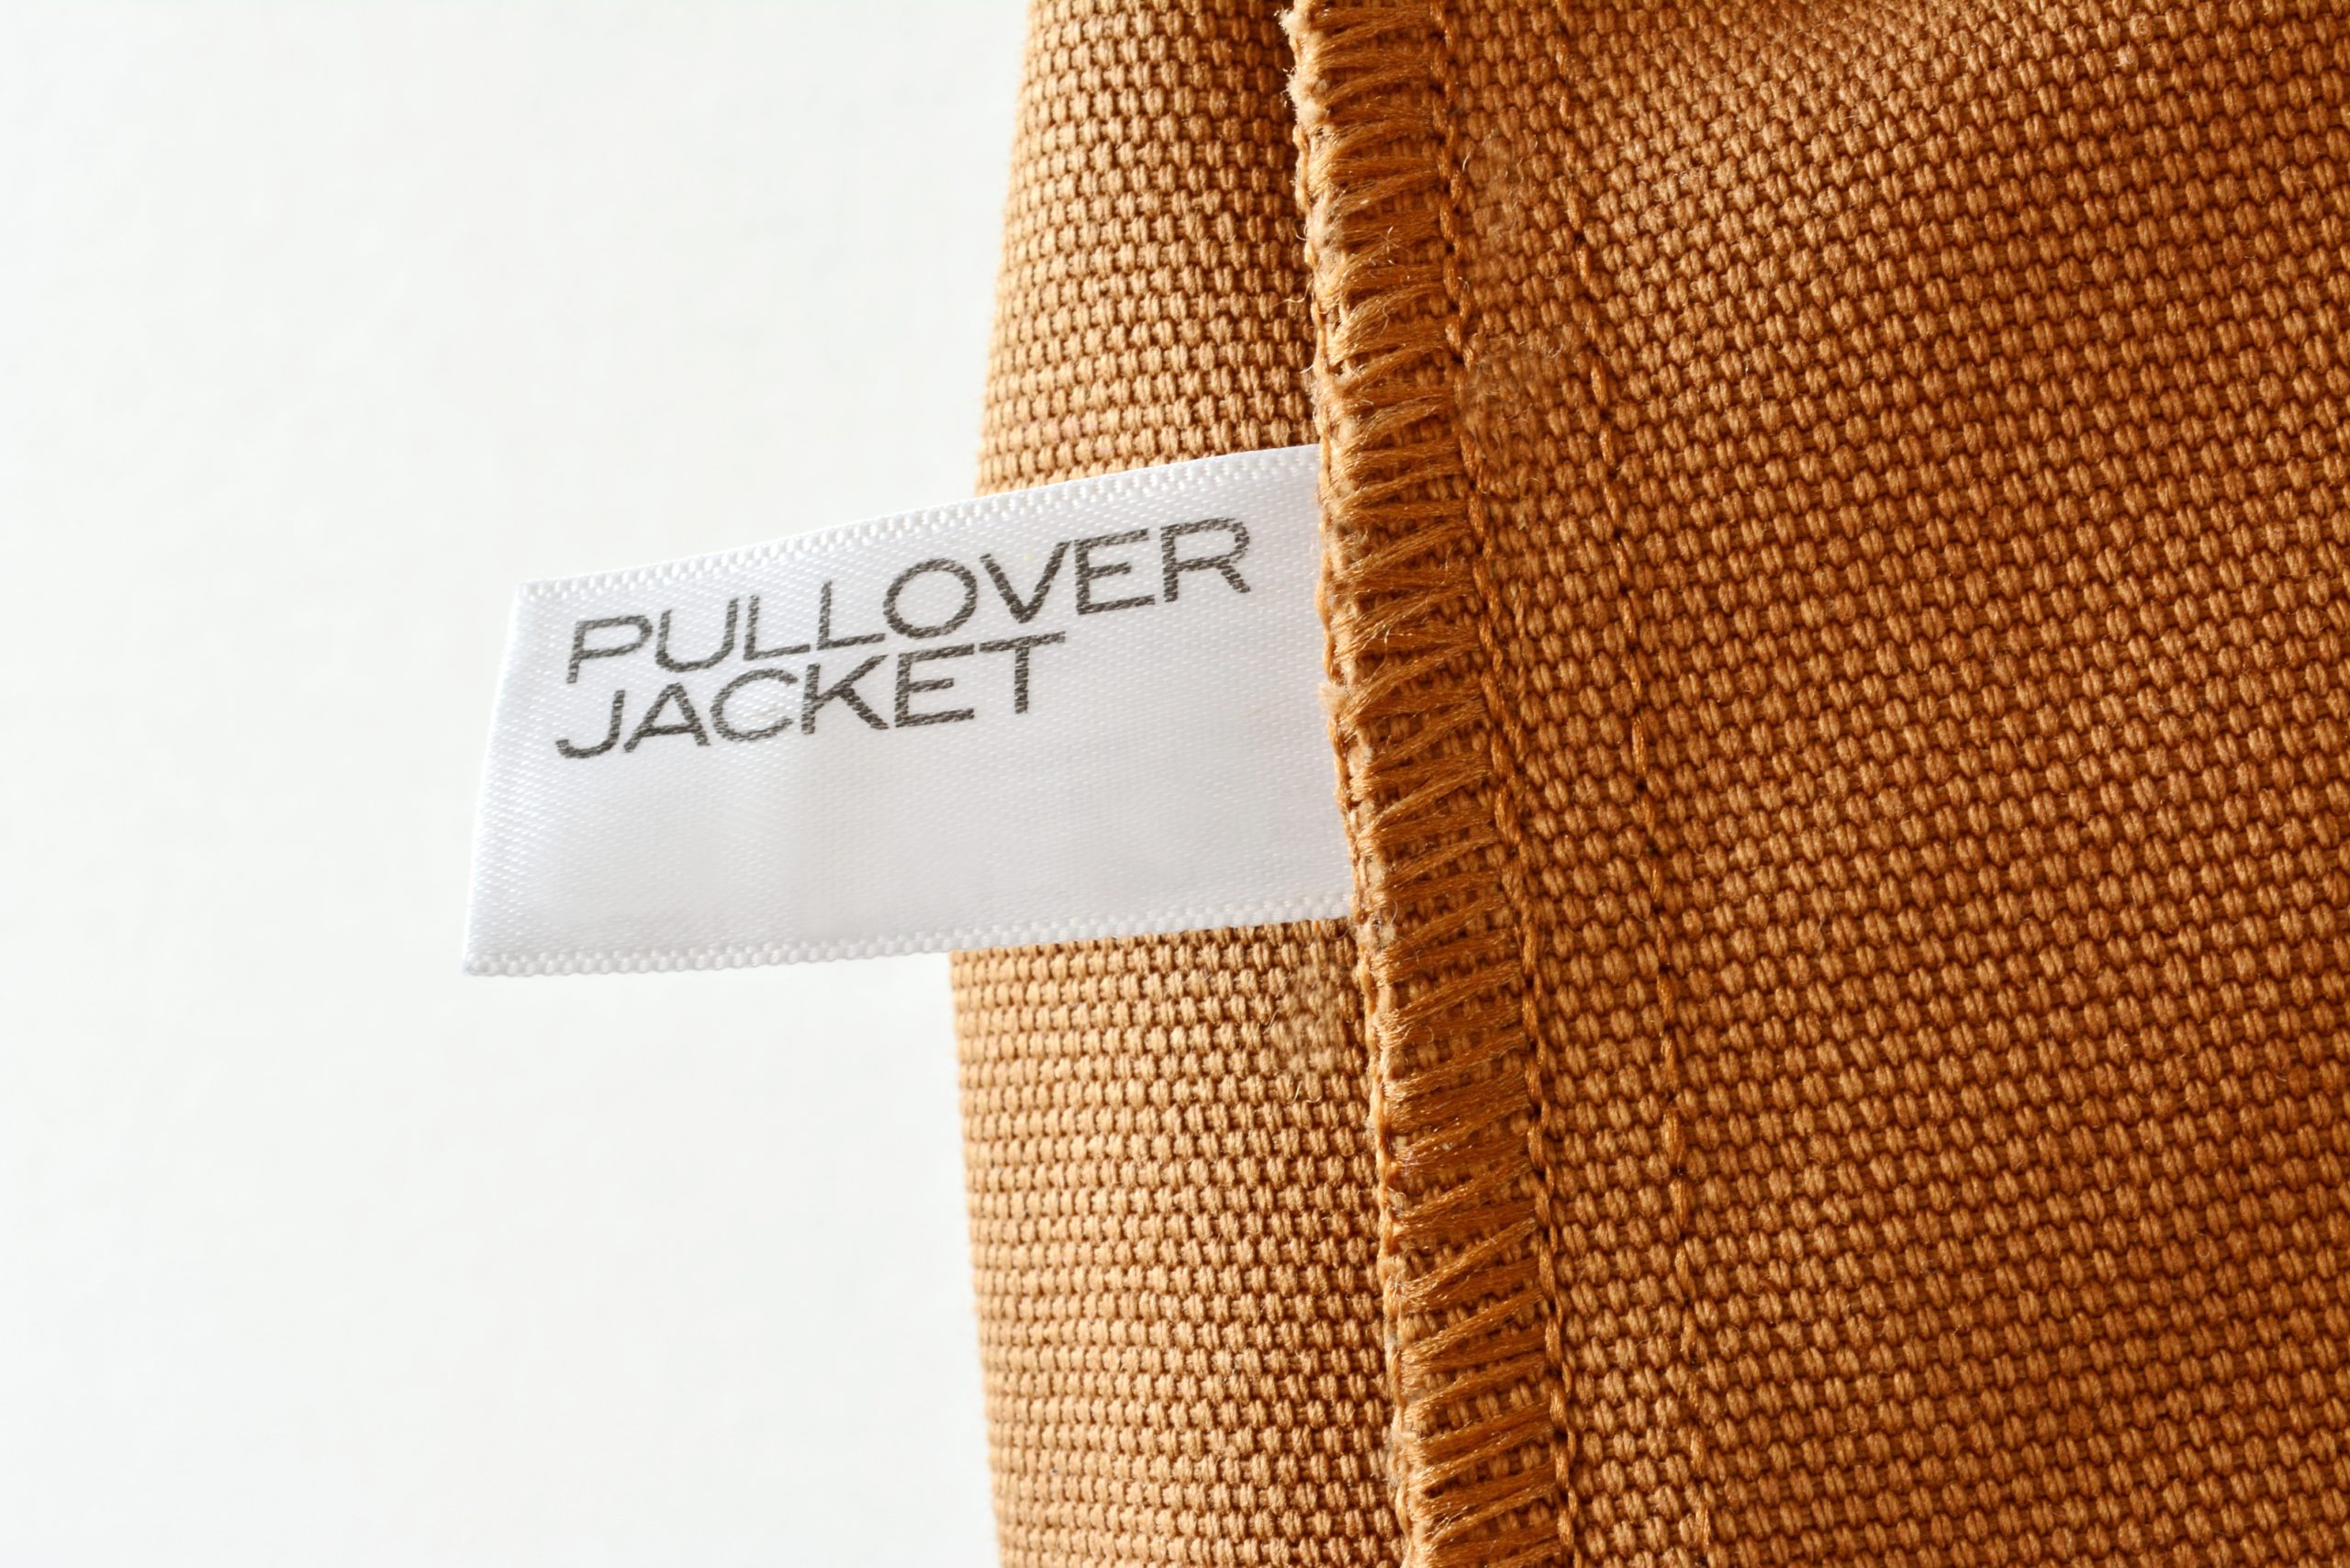 Weisses Label / Etikett / Pullover / Jacket